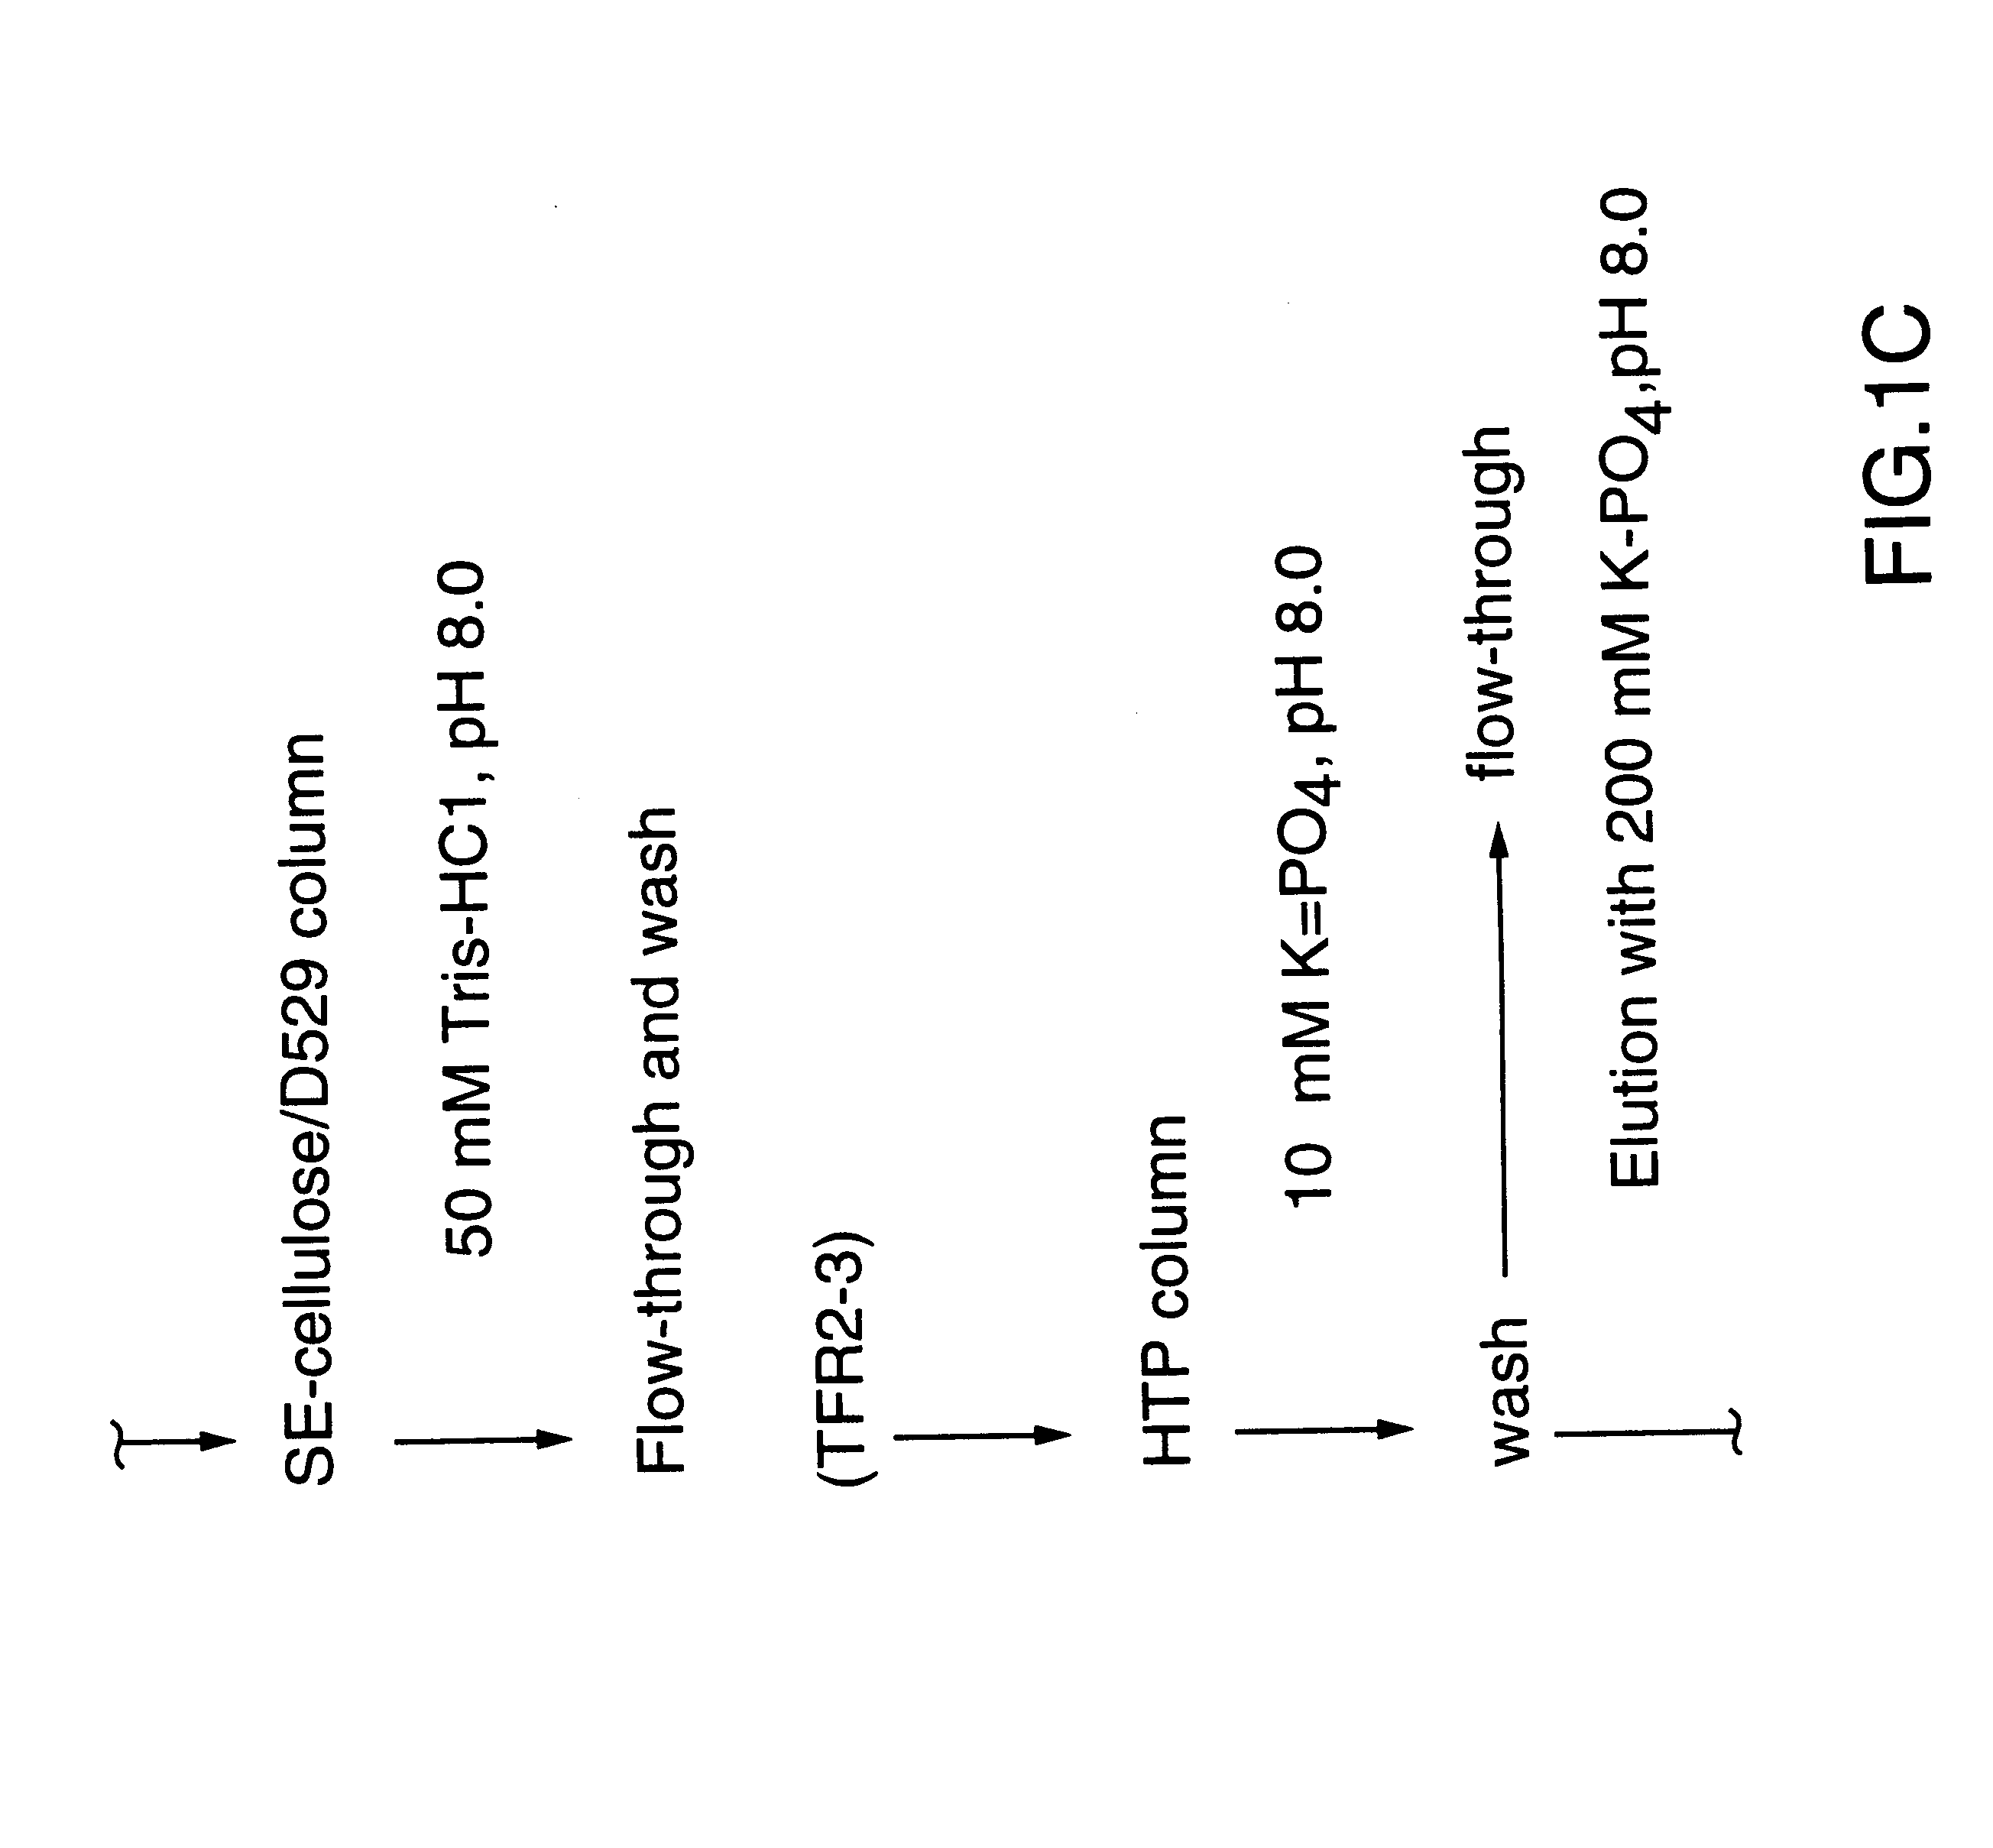 Transferrin receptor protein of moraxella